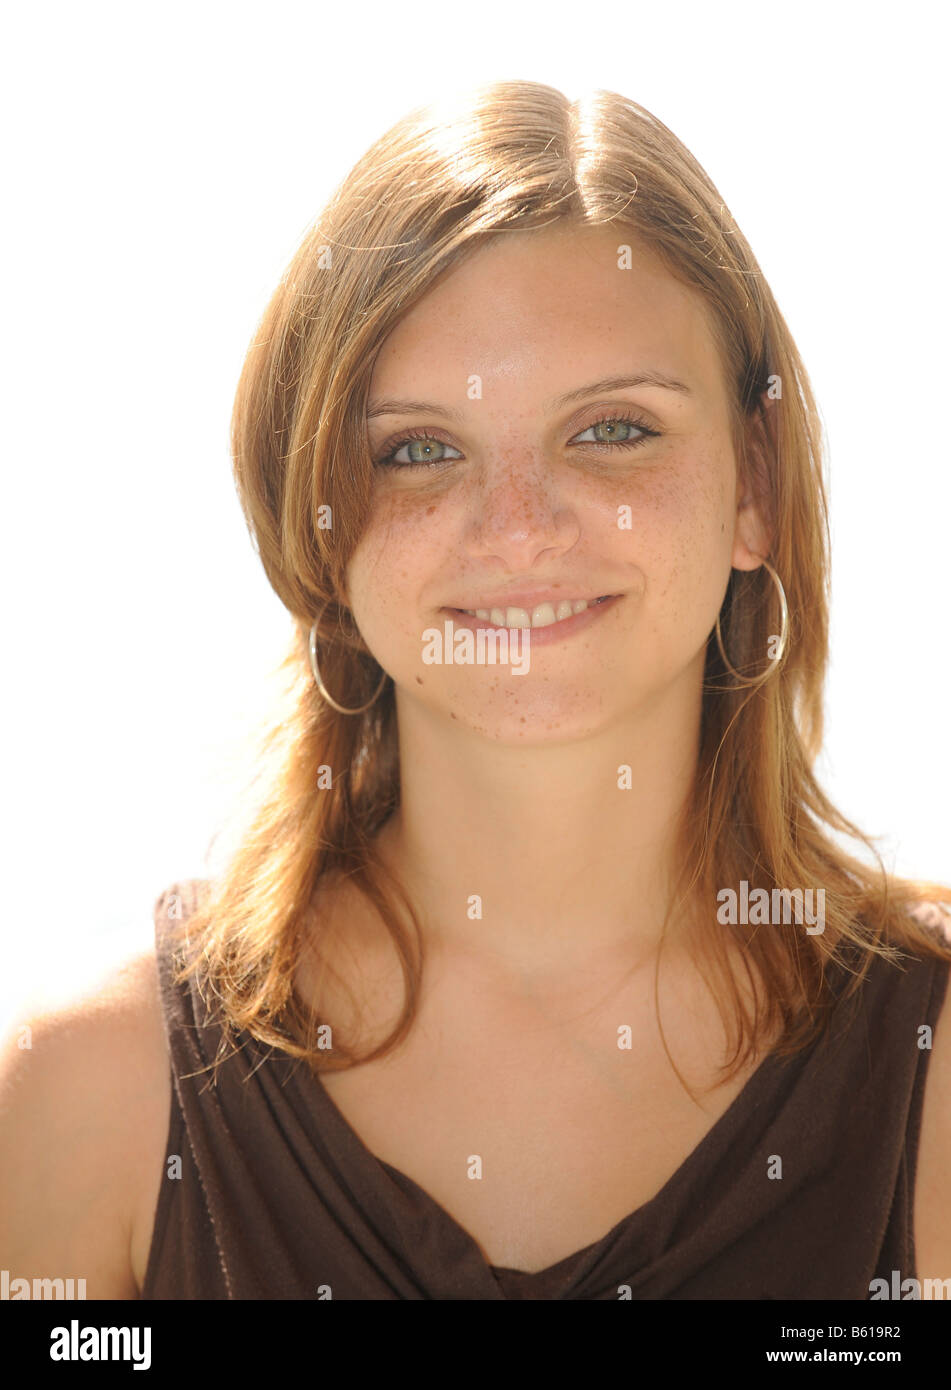 Girl, portrait Stock Photo